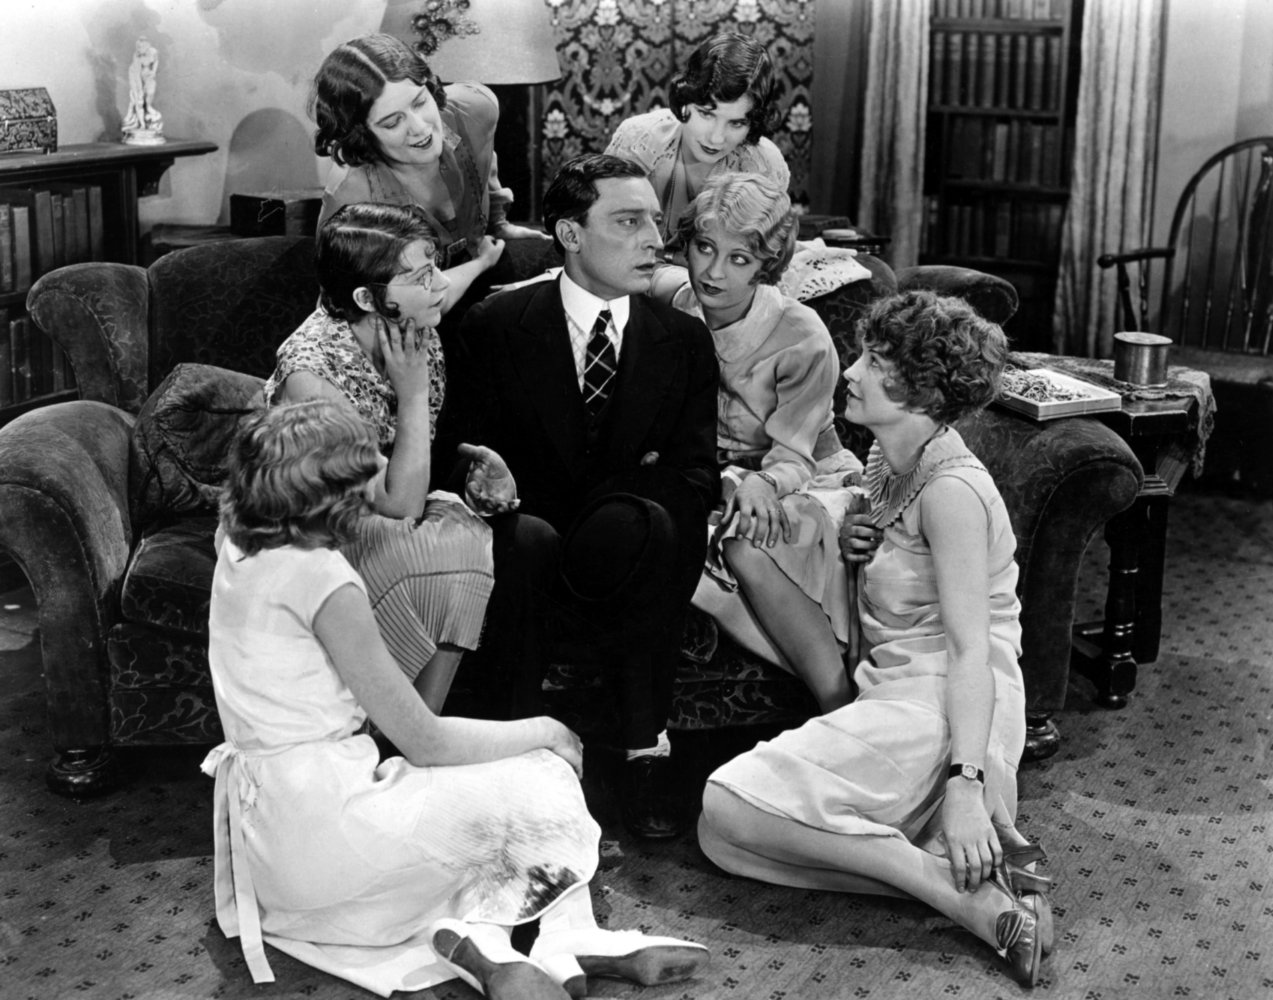 Buster Keaton